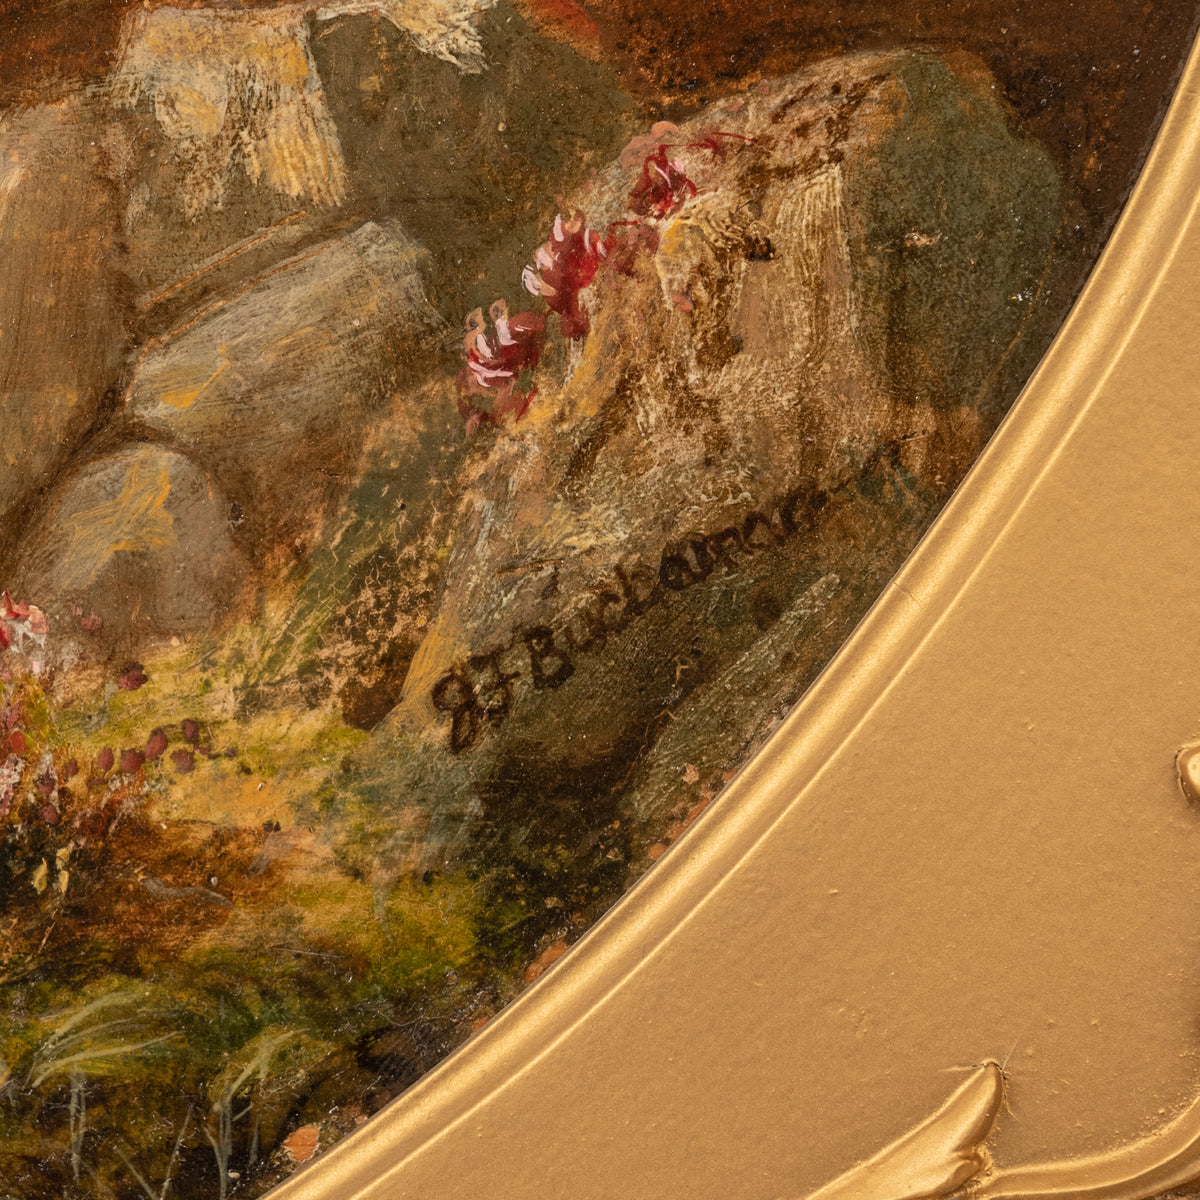 Pair Antique Oil Paintings Scottish Highland Loch Scenes G. F. Buchanan, 1872